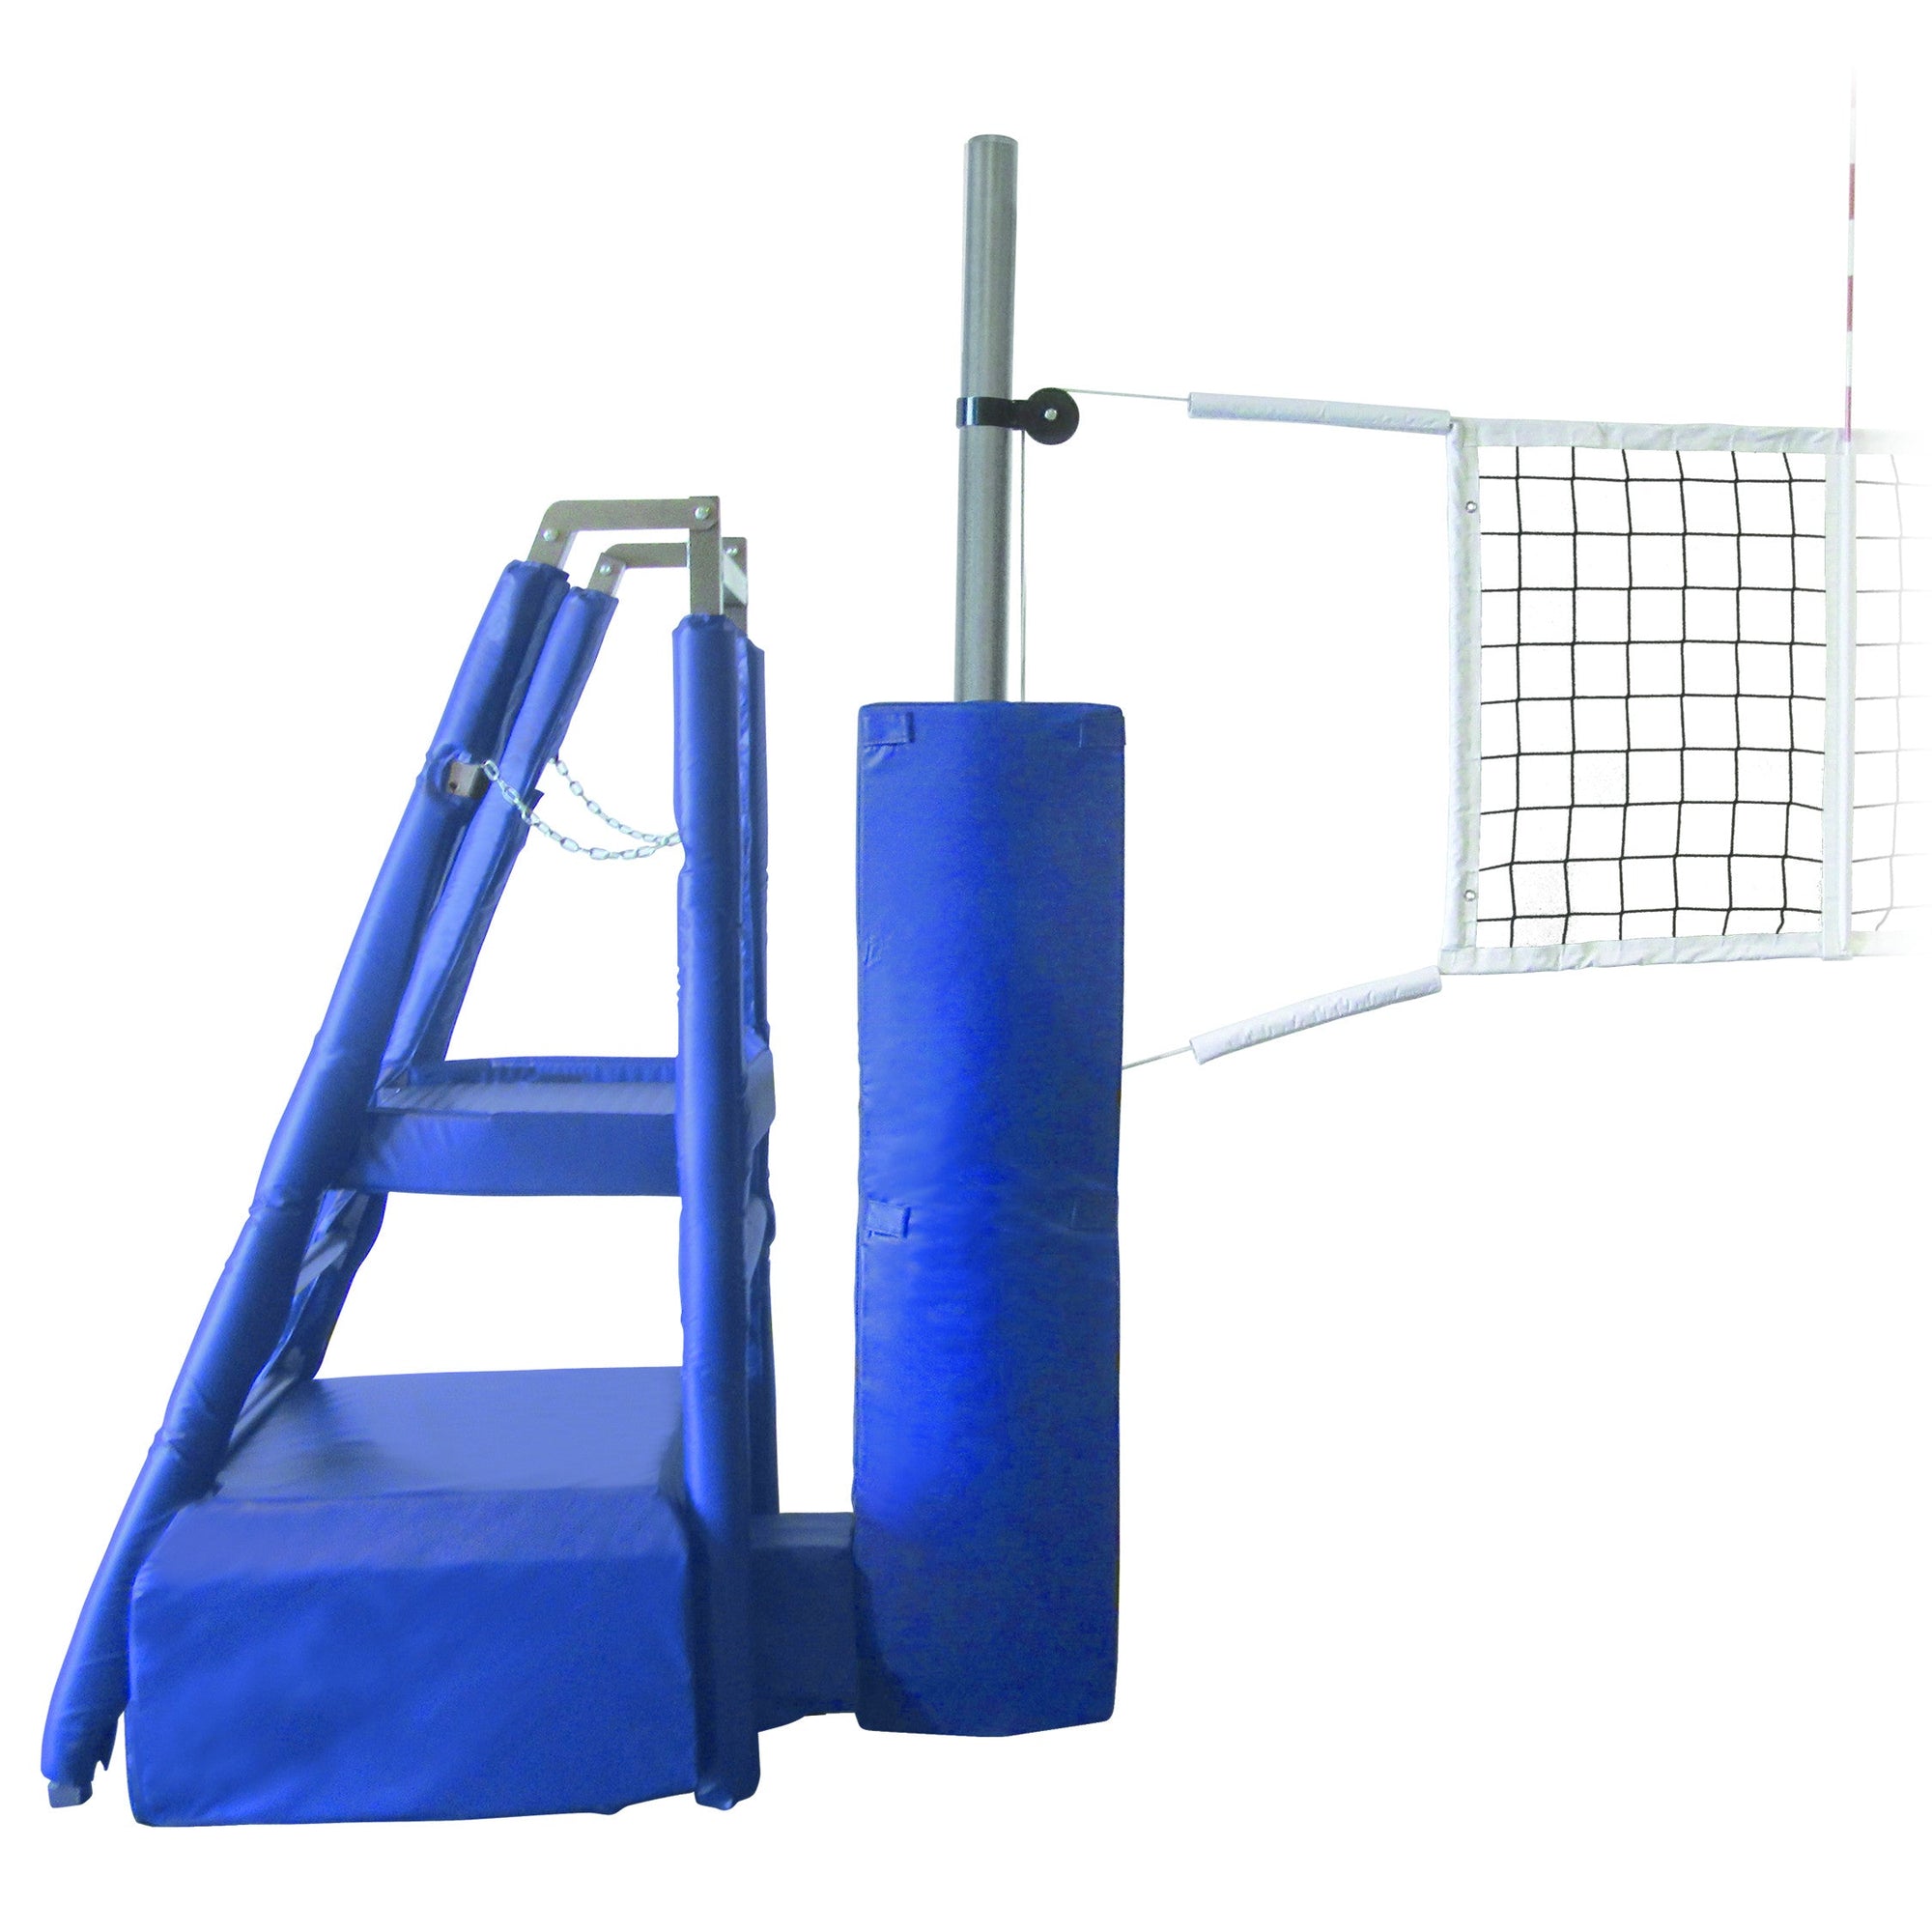 First Team PortaCourt Stellar Portable Recreational Volleyball System